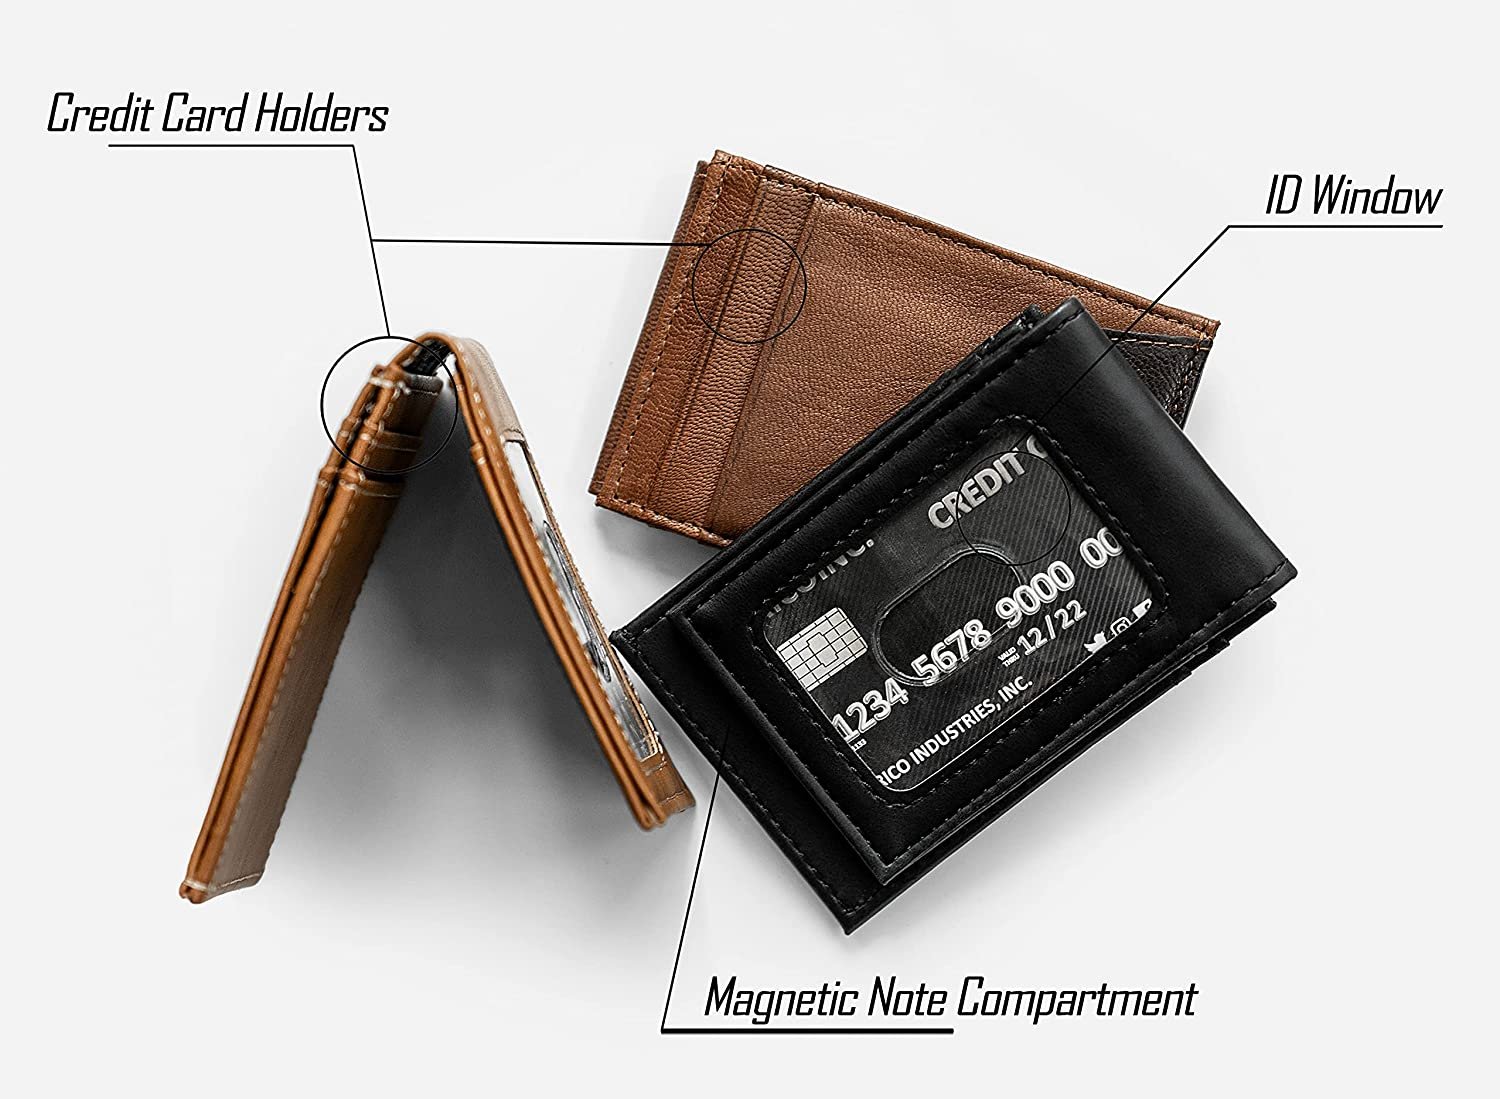 Seattle Seahawks Premium Brown Leather Wallet, Front Pocket Magnetic Money Clip, Laser Engraved, Vegan